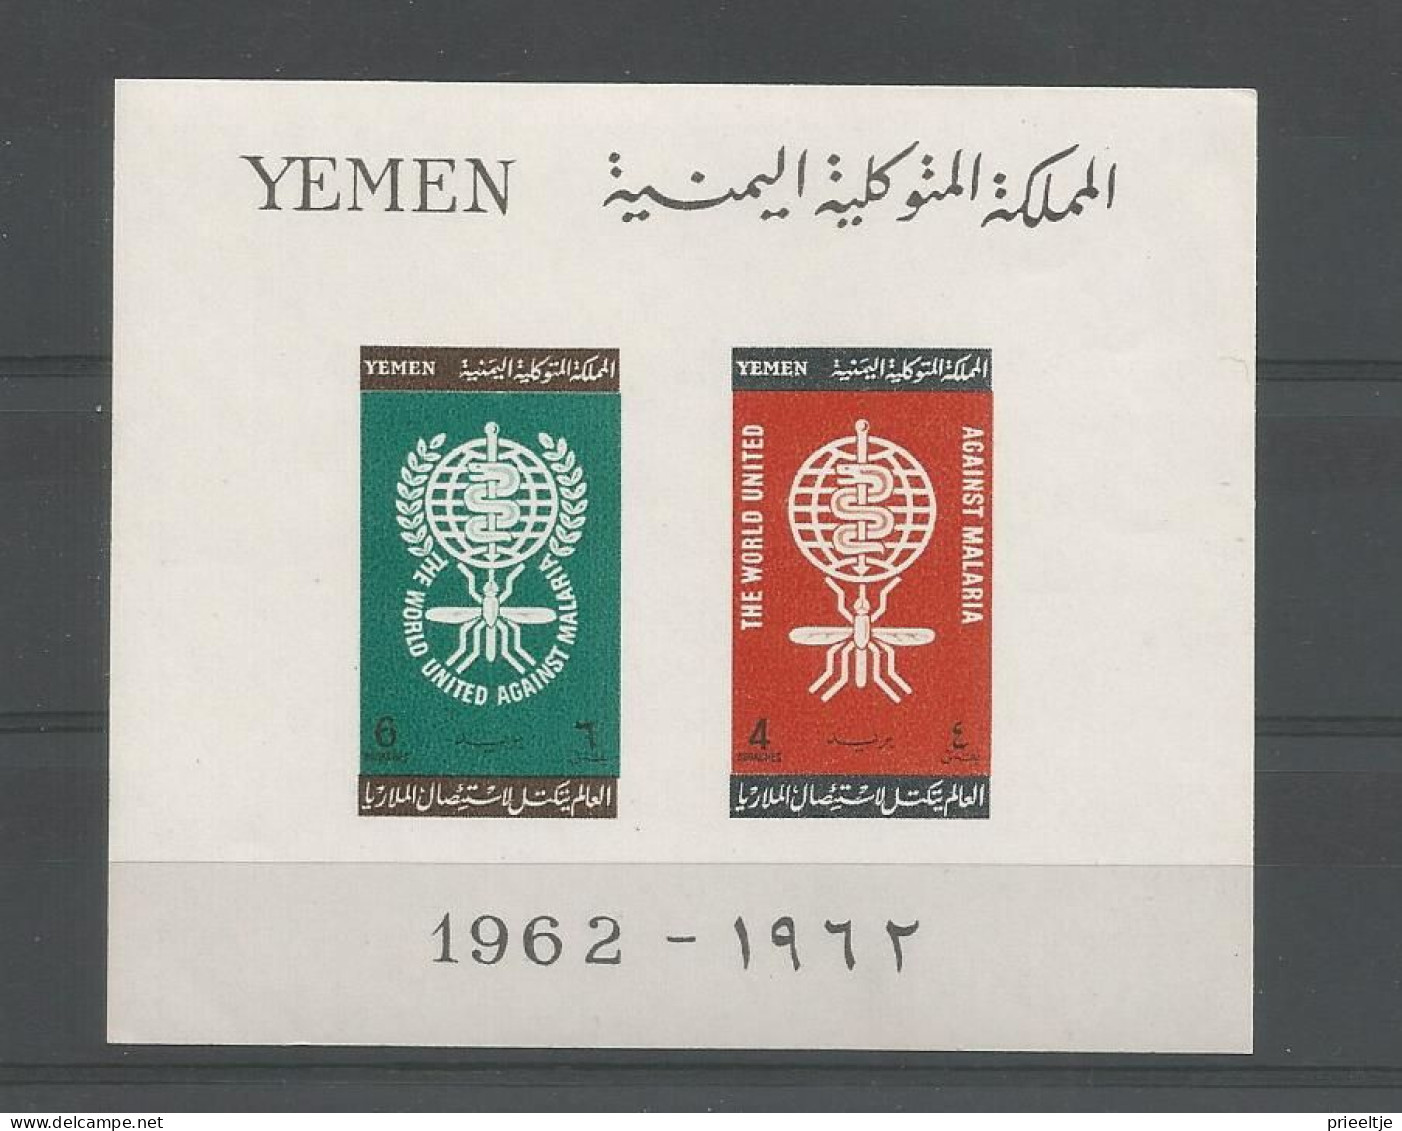 Yemen 1960 Against Malaria S/S Y.T. BF 8 ** - Yemen